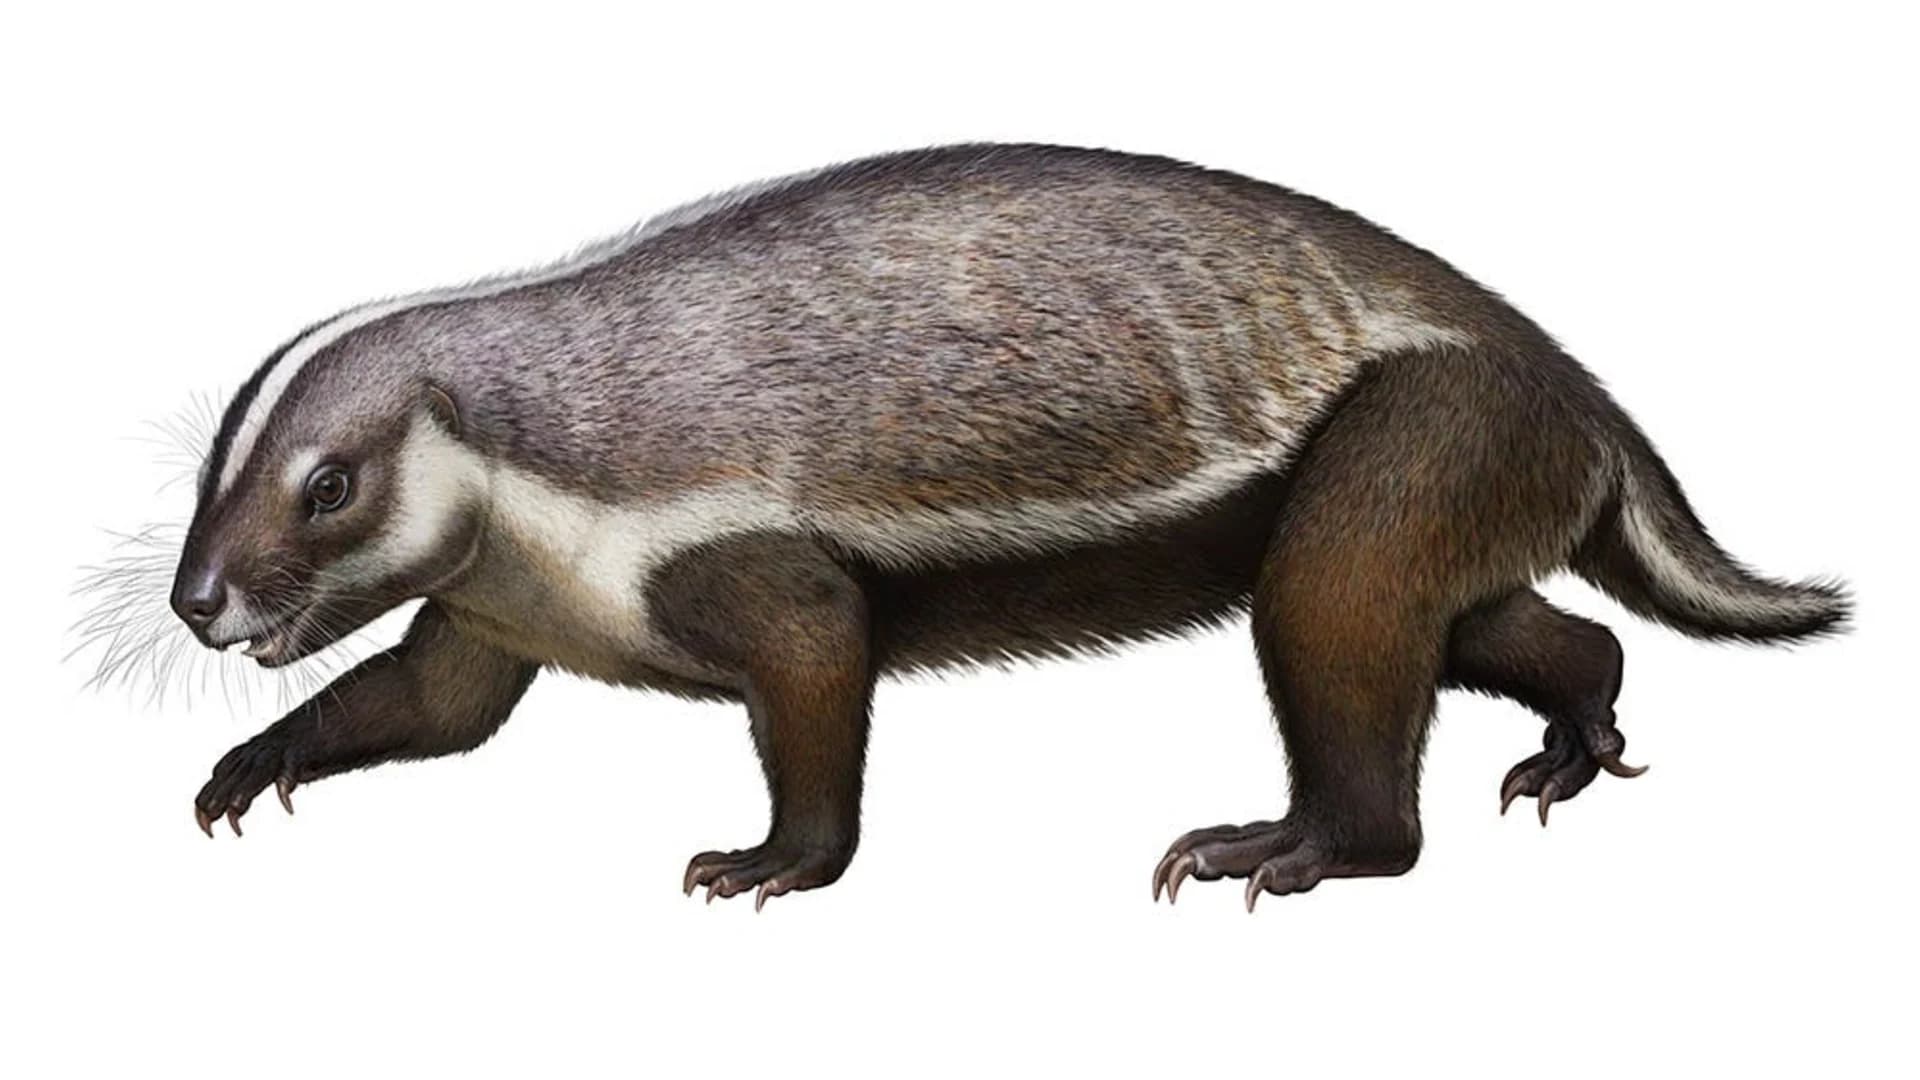 Stony Brook scientists unearth bizarre ancient mammal